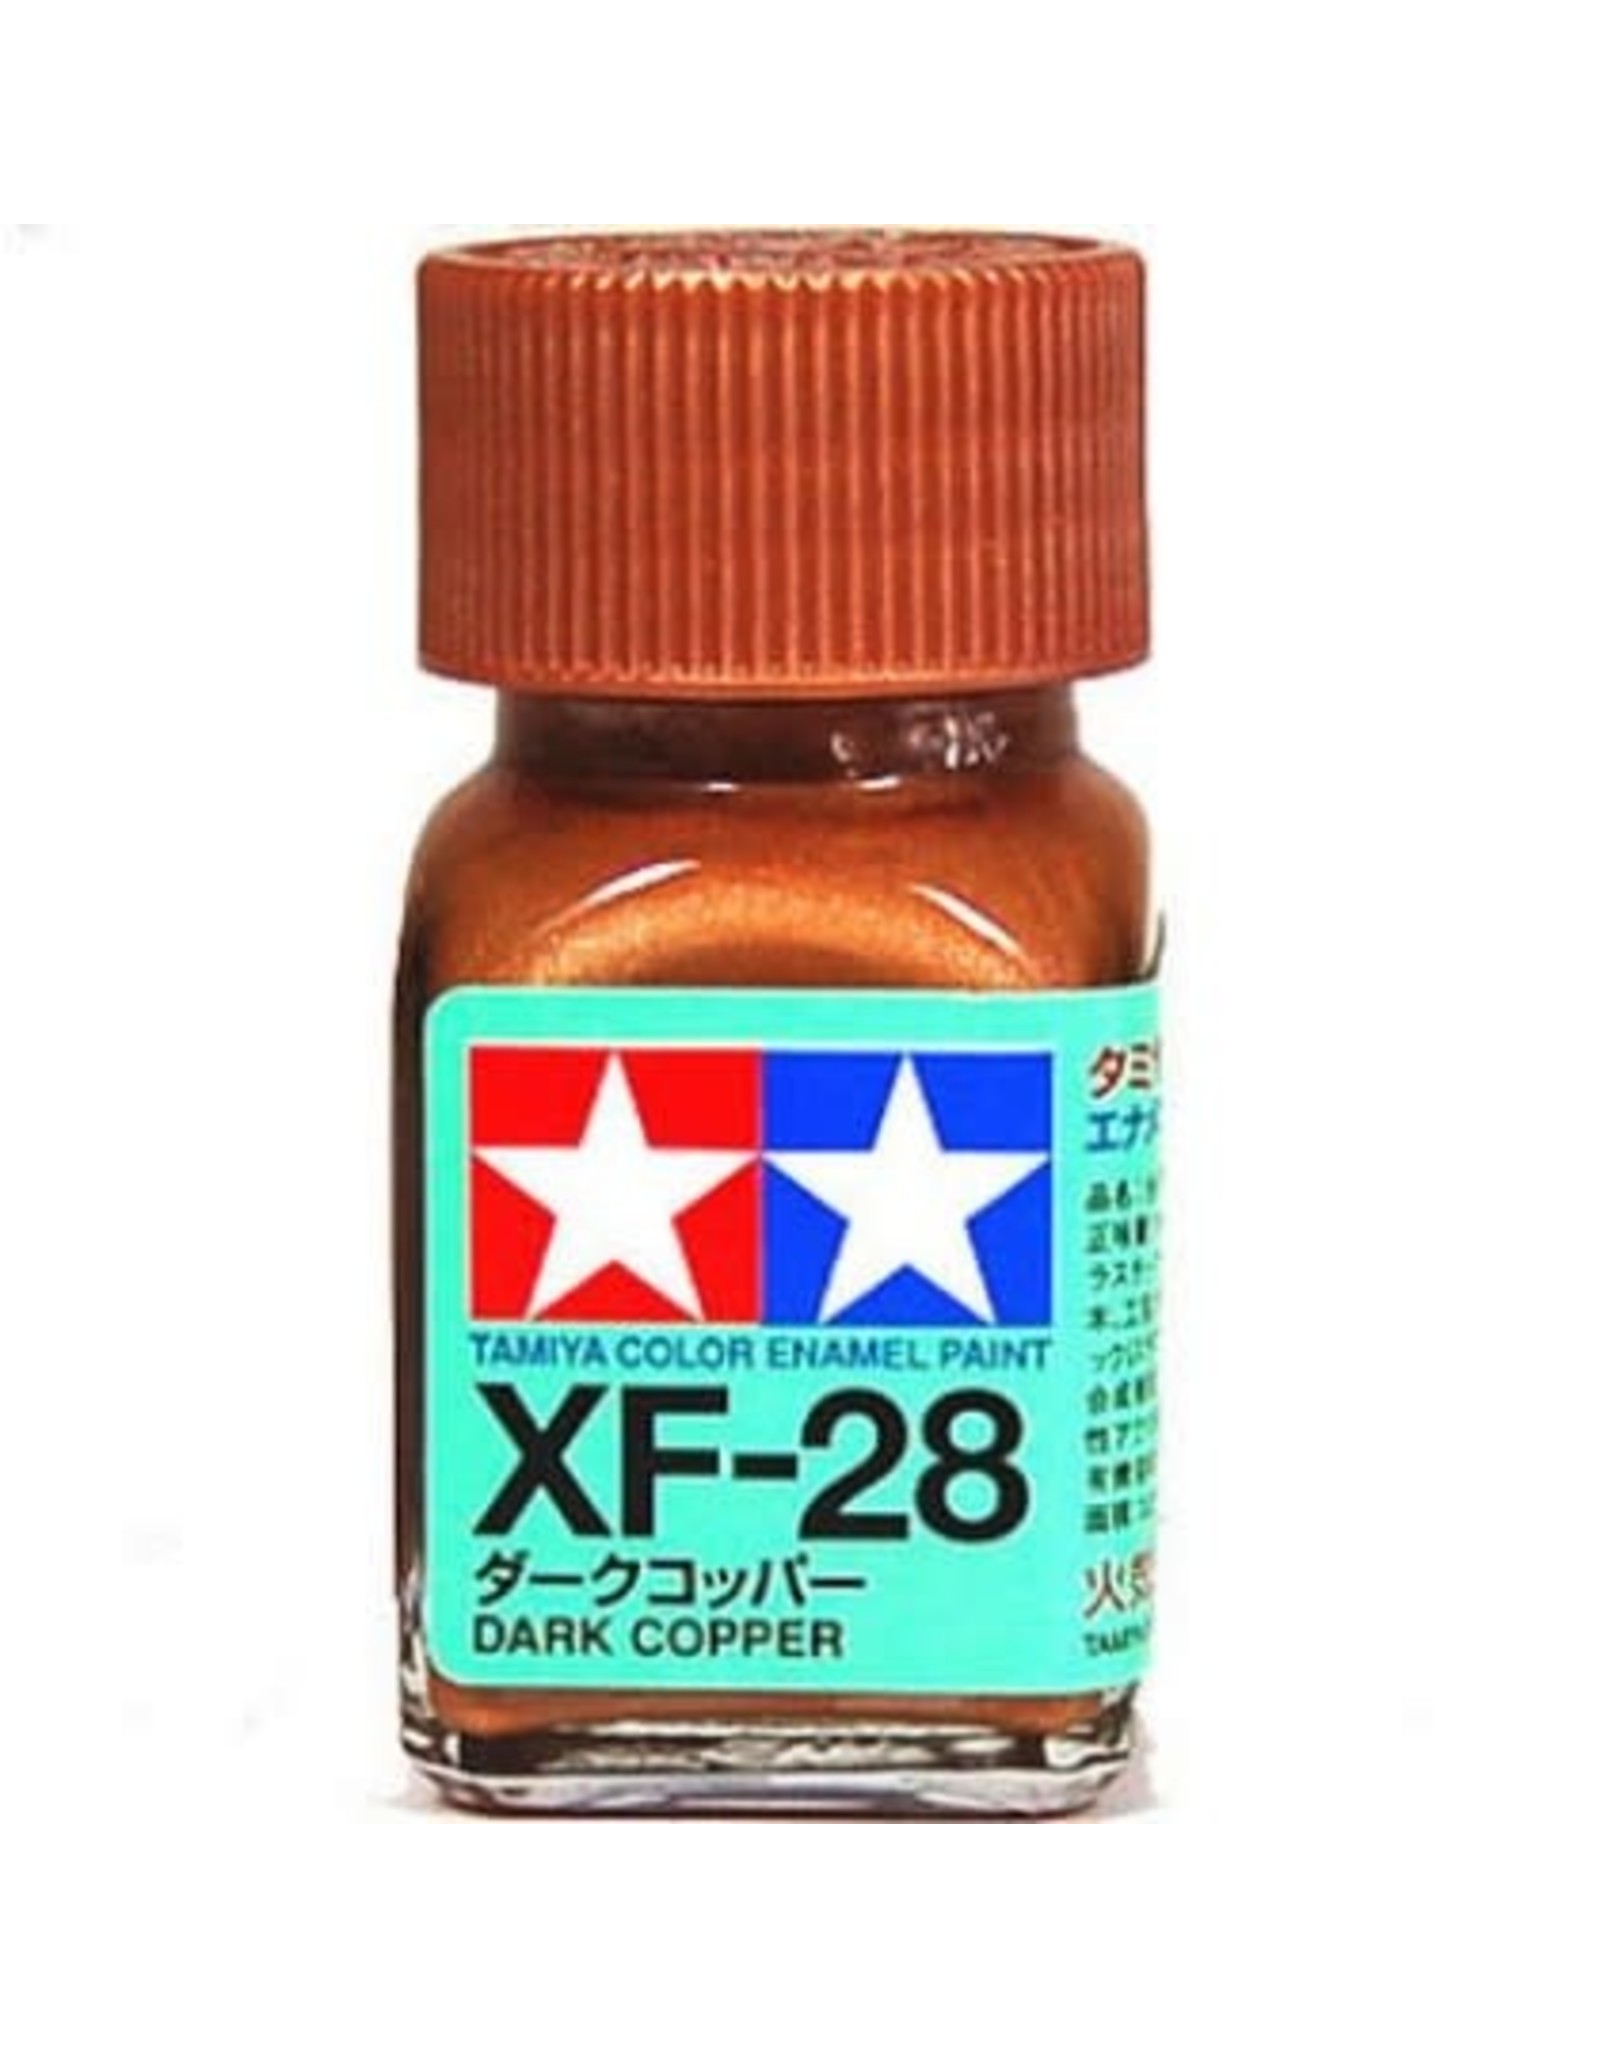 Tamiya Tamiya color enamel paint - XF-28  - Dark copper